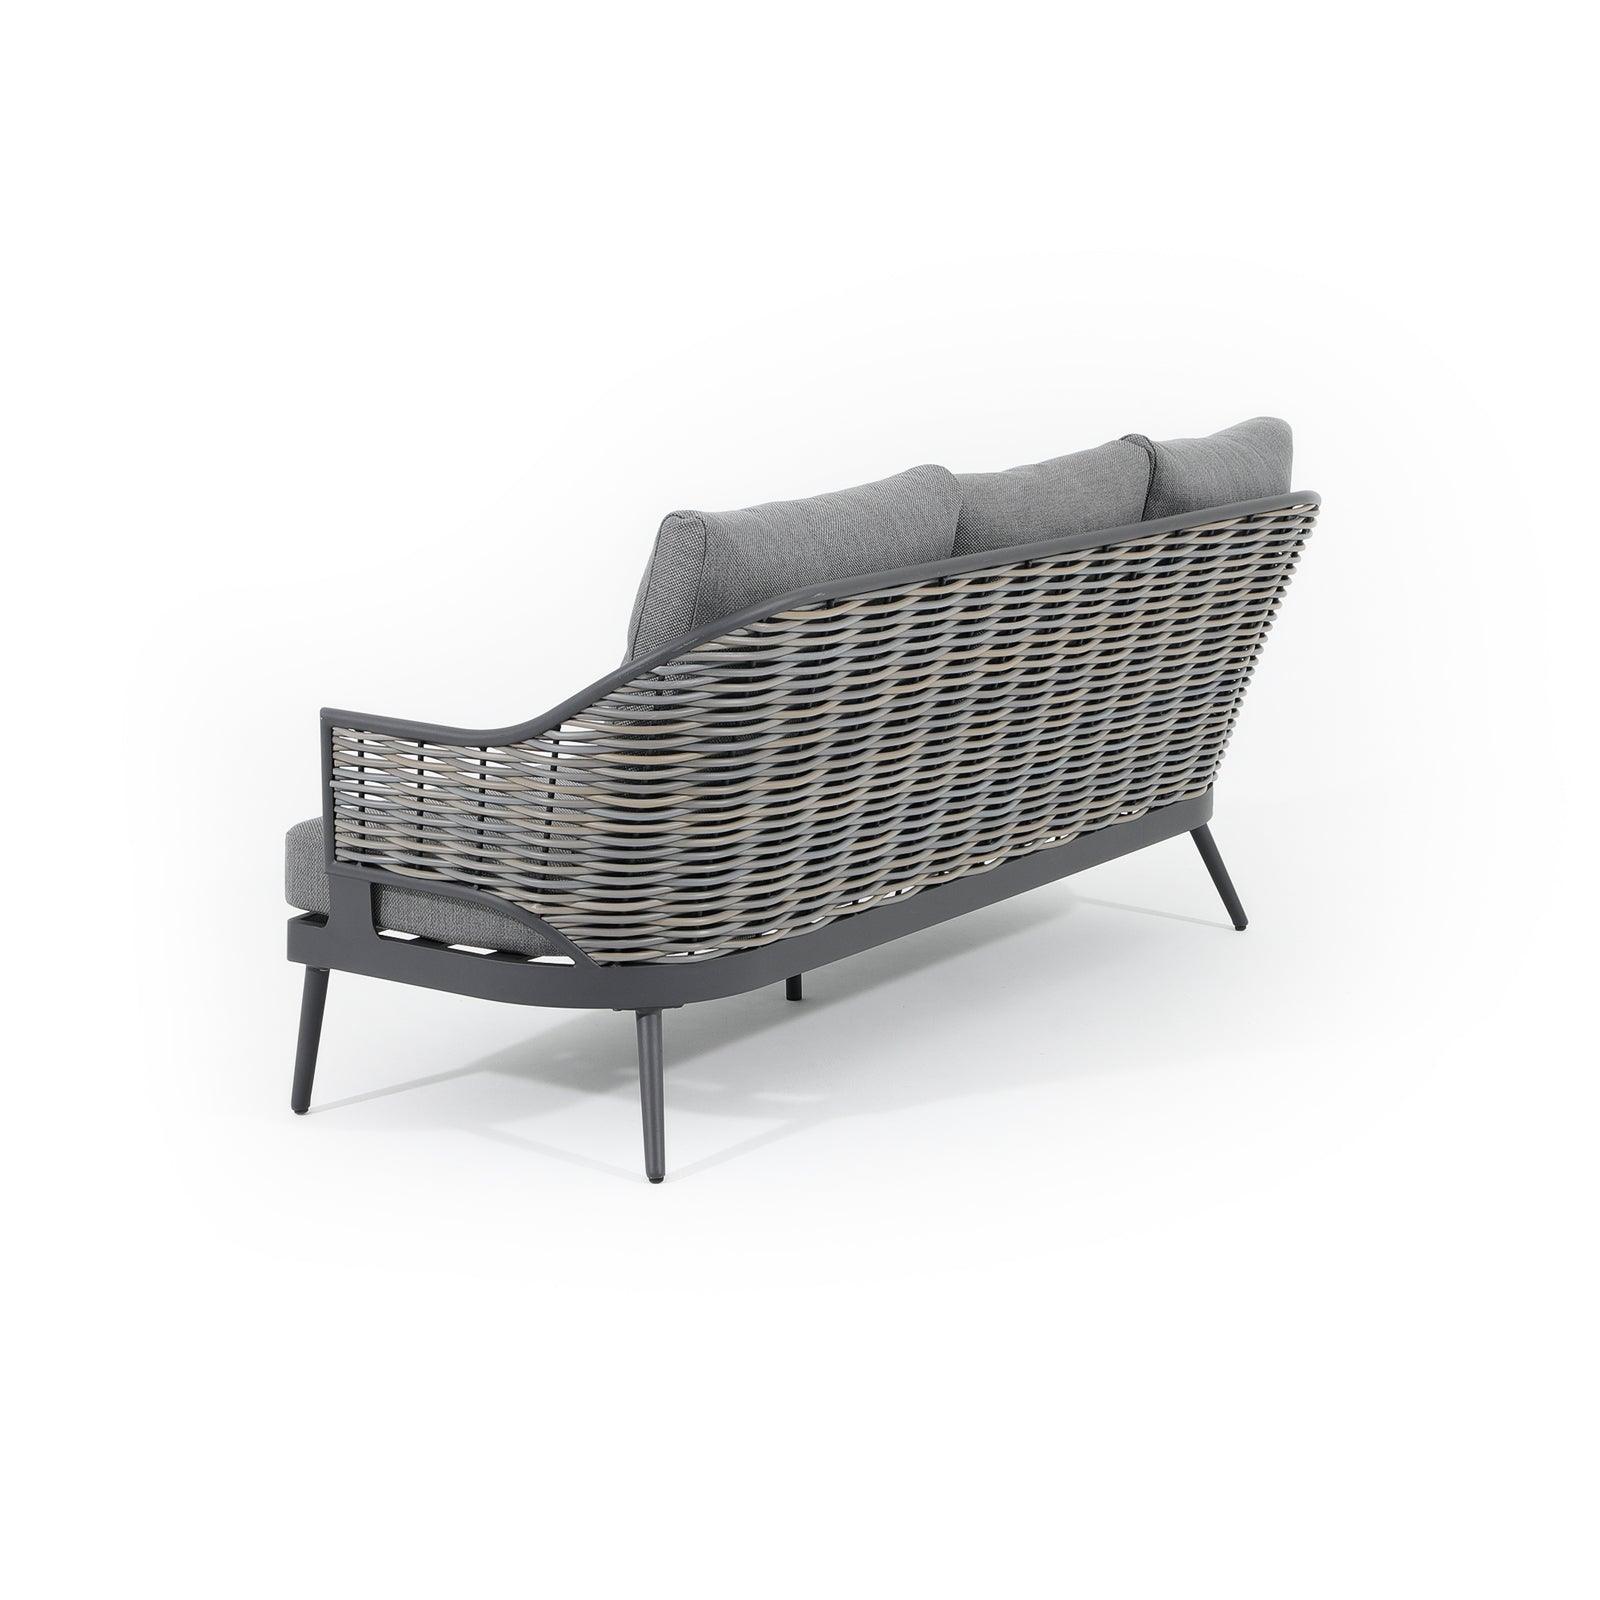 Burano Grey wicker outdoor Sofa with aluminum frame, grey cushions, 3 seat, left - Jardina Furniture